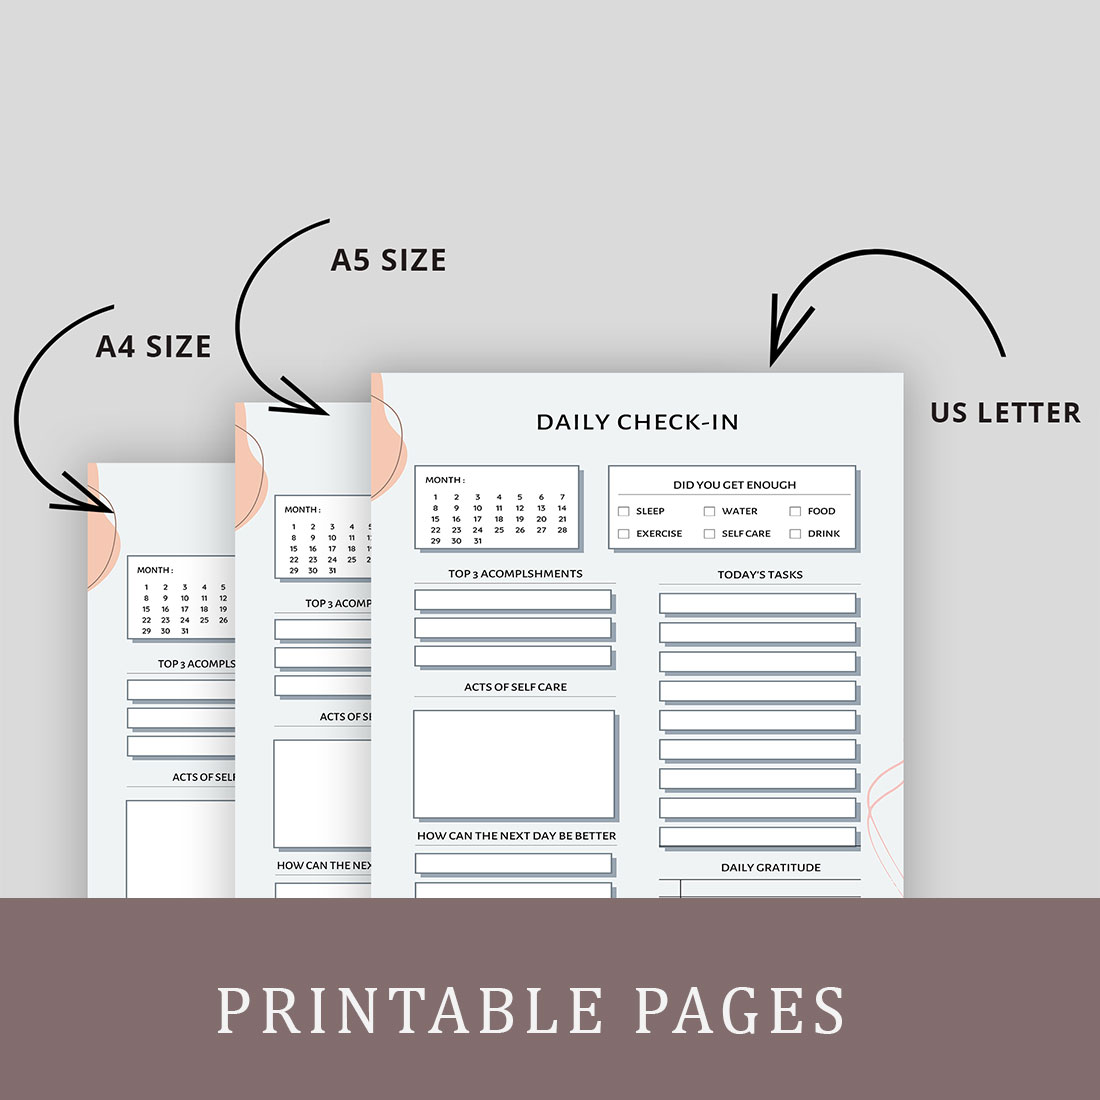 Printable Planner Bundle Vol.21 created by Kiron Kumar.